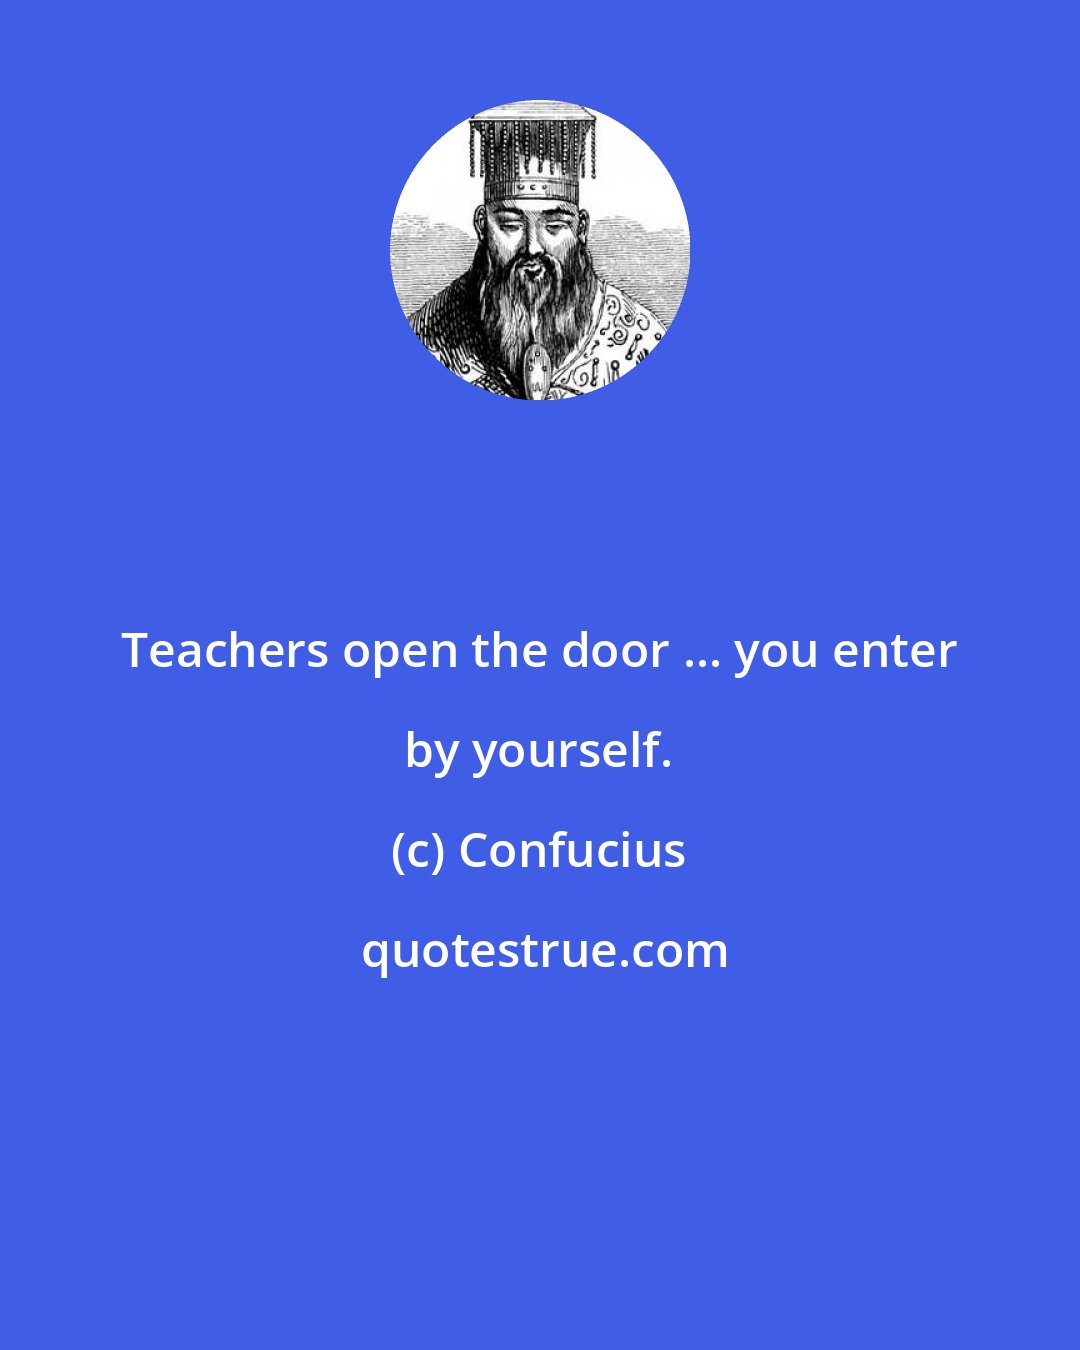 Confucius: Teachers open the door ... you enter by yourself.